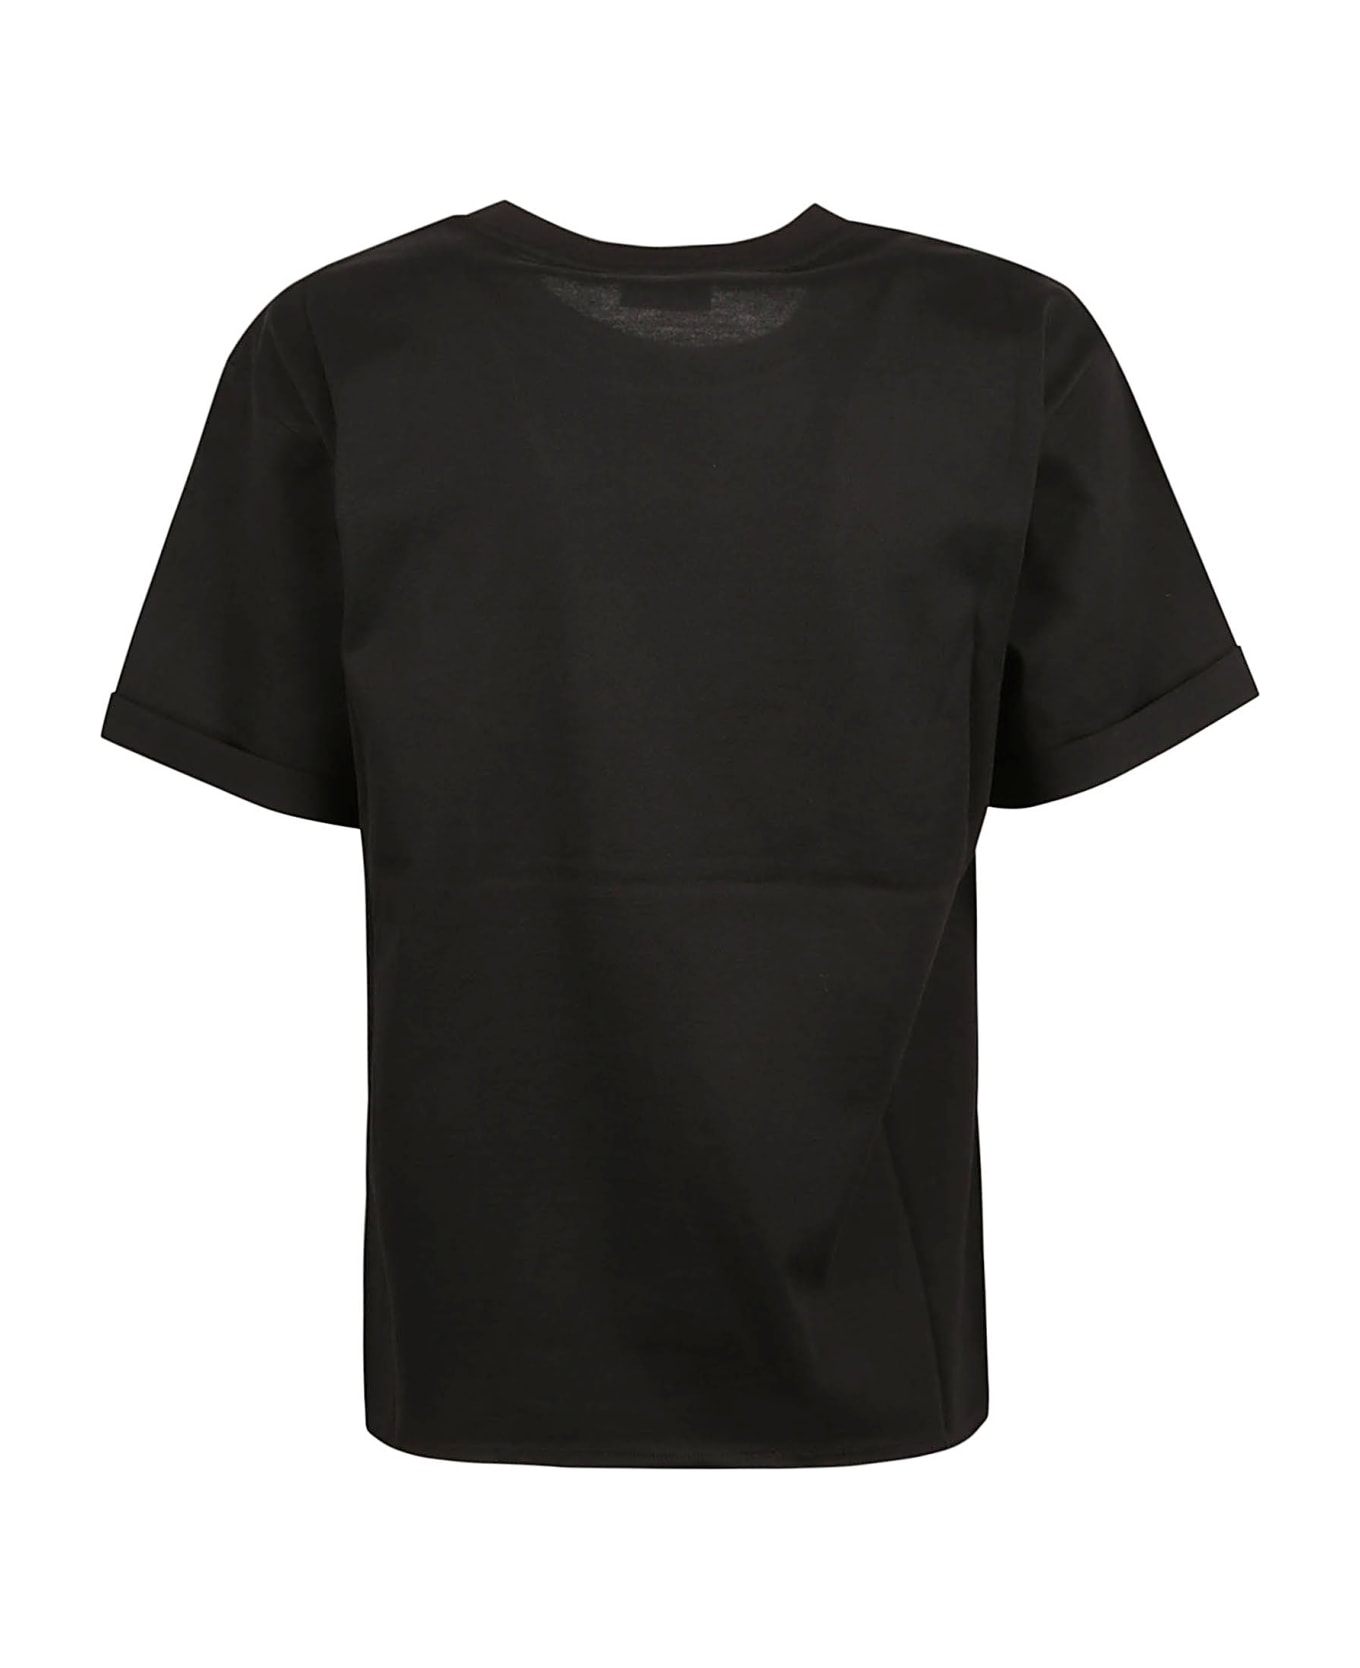 Saint Laurent Logo Round Neck T-shirt - Black